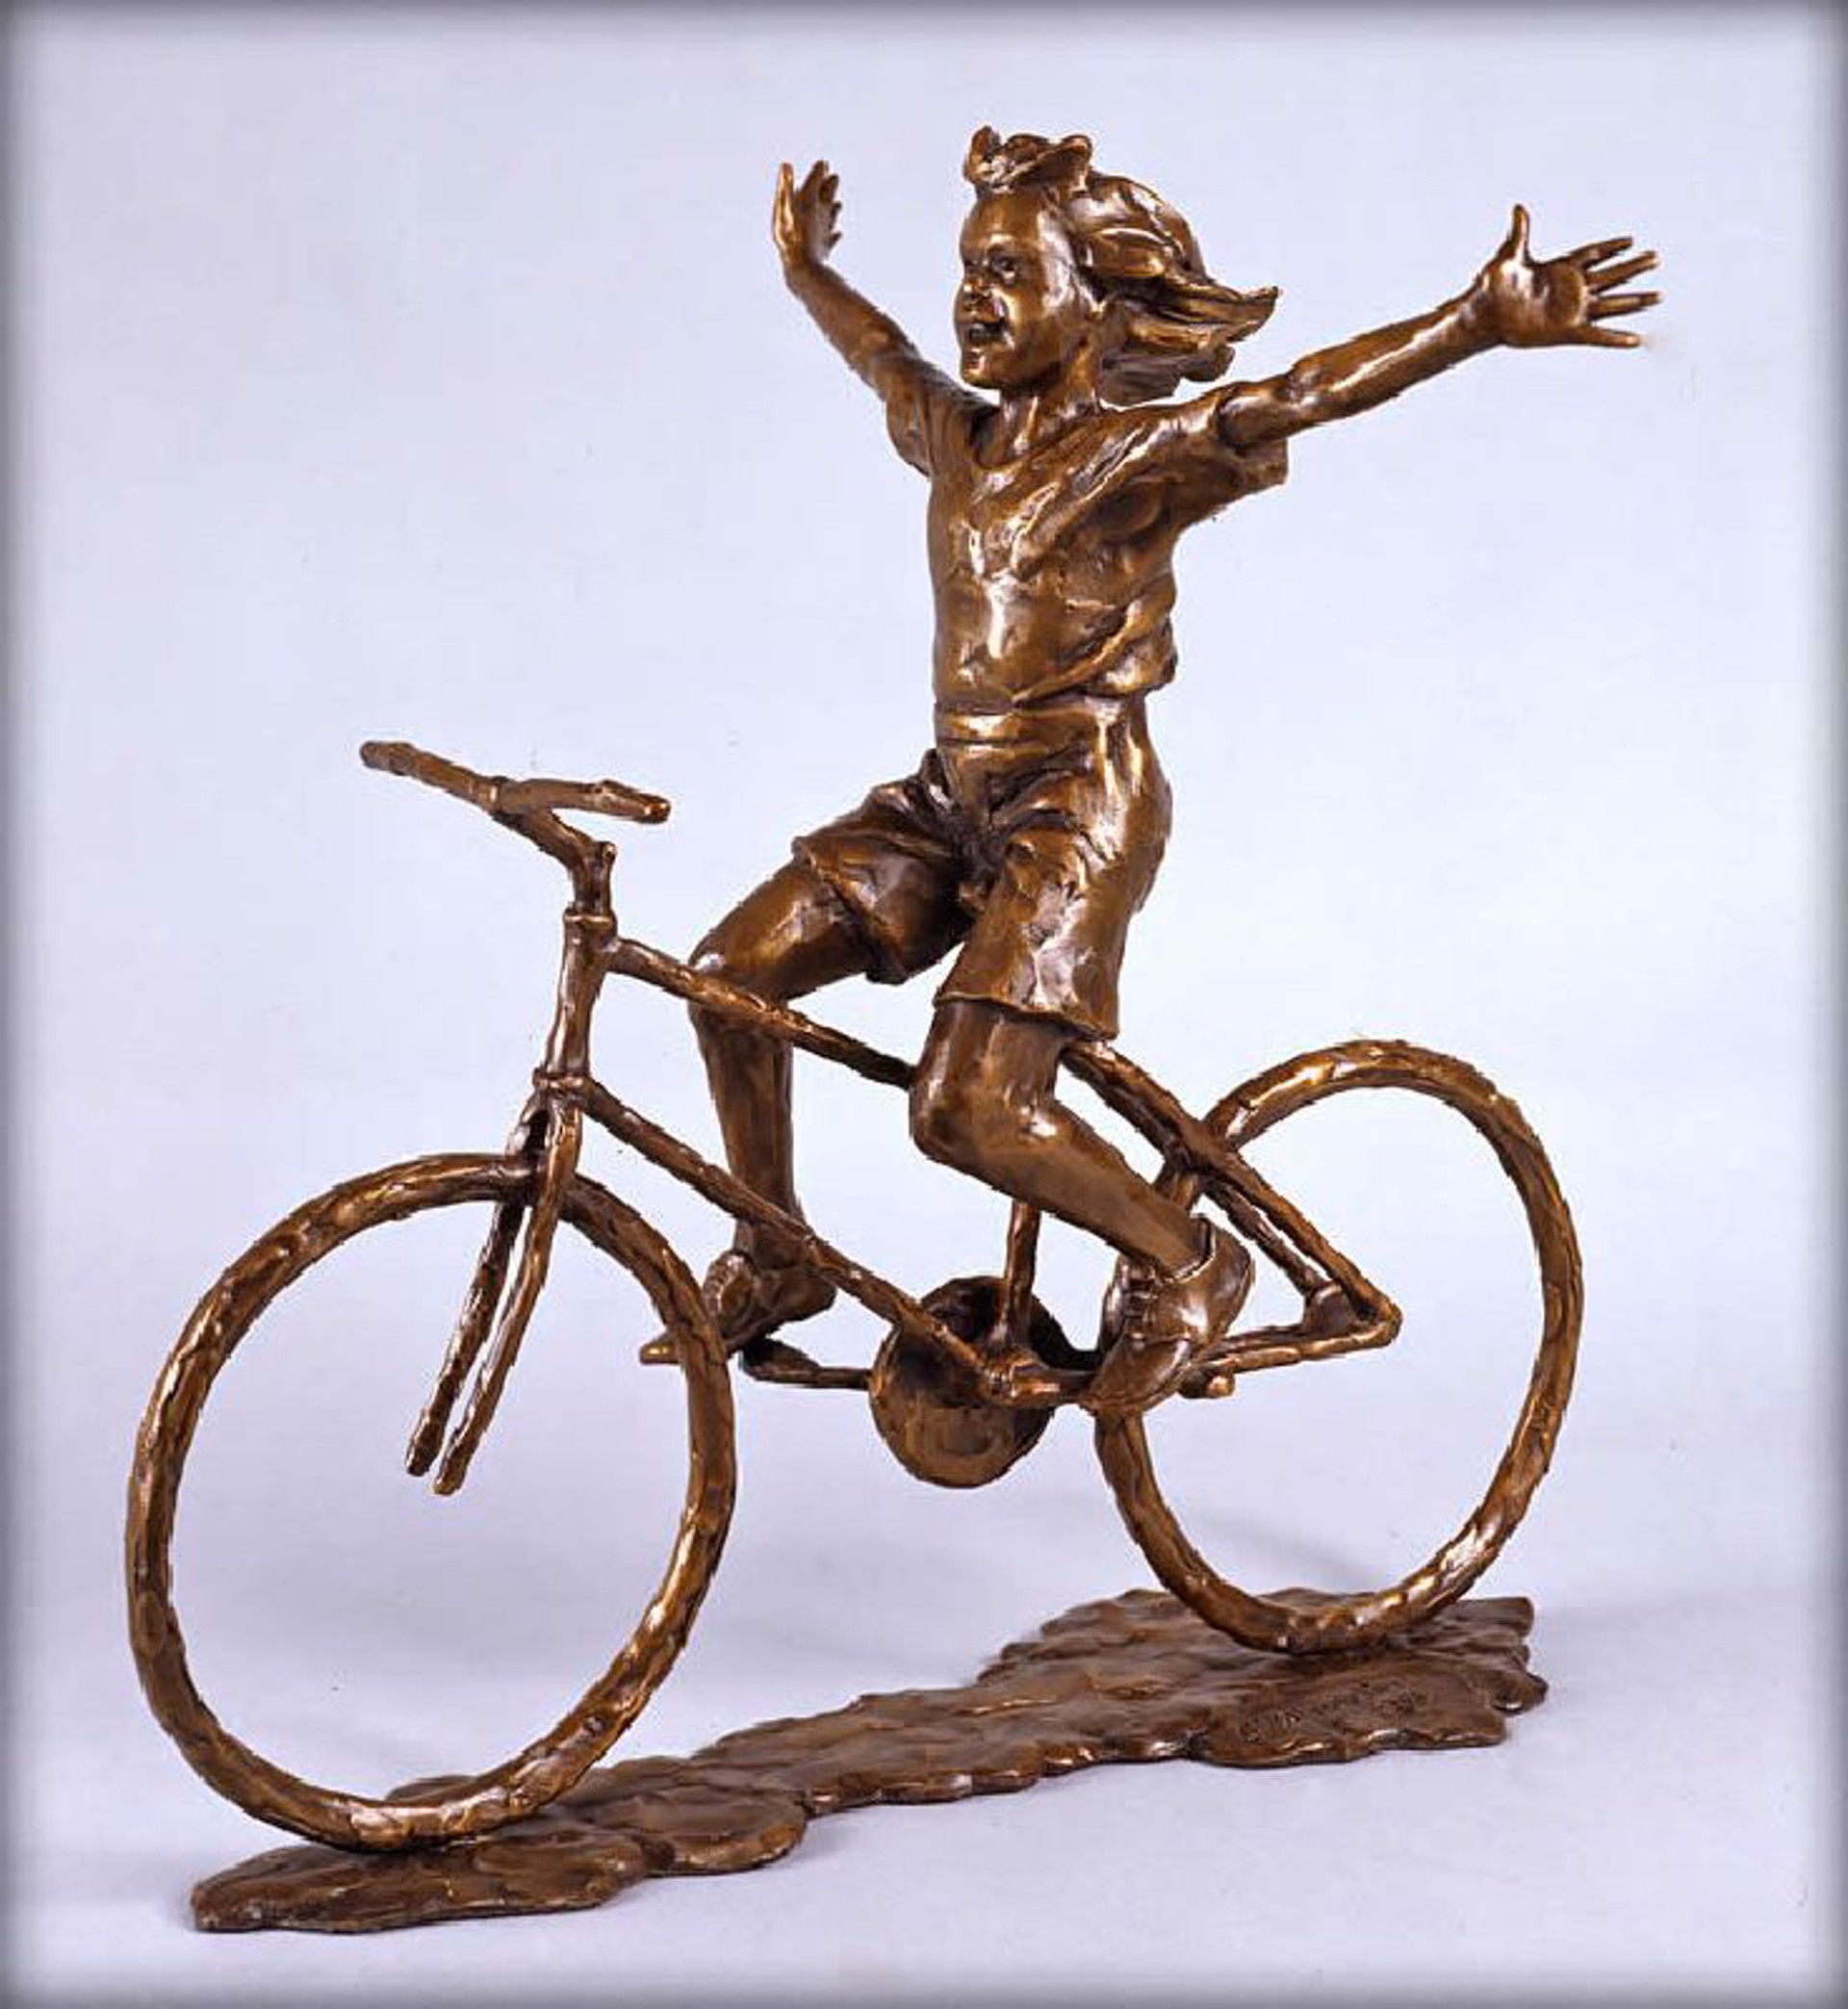 Freewheelin' by Gary Lee Price (sculptor)